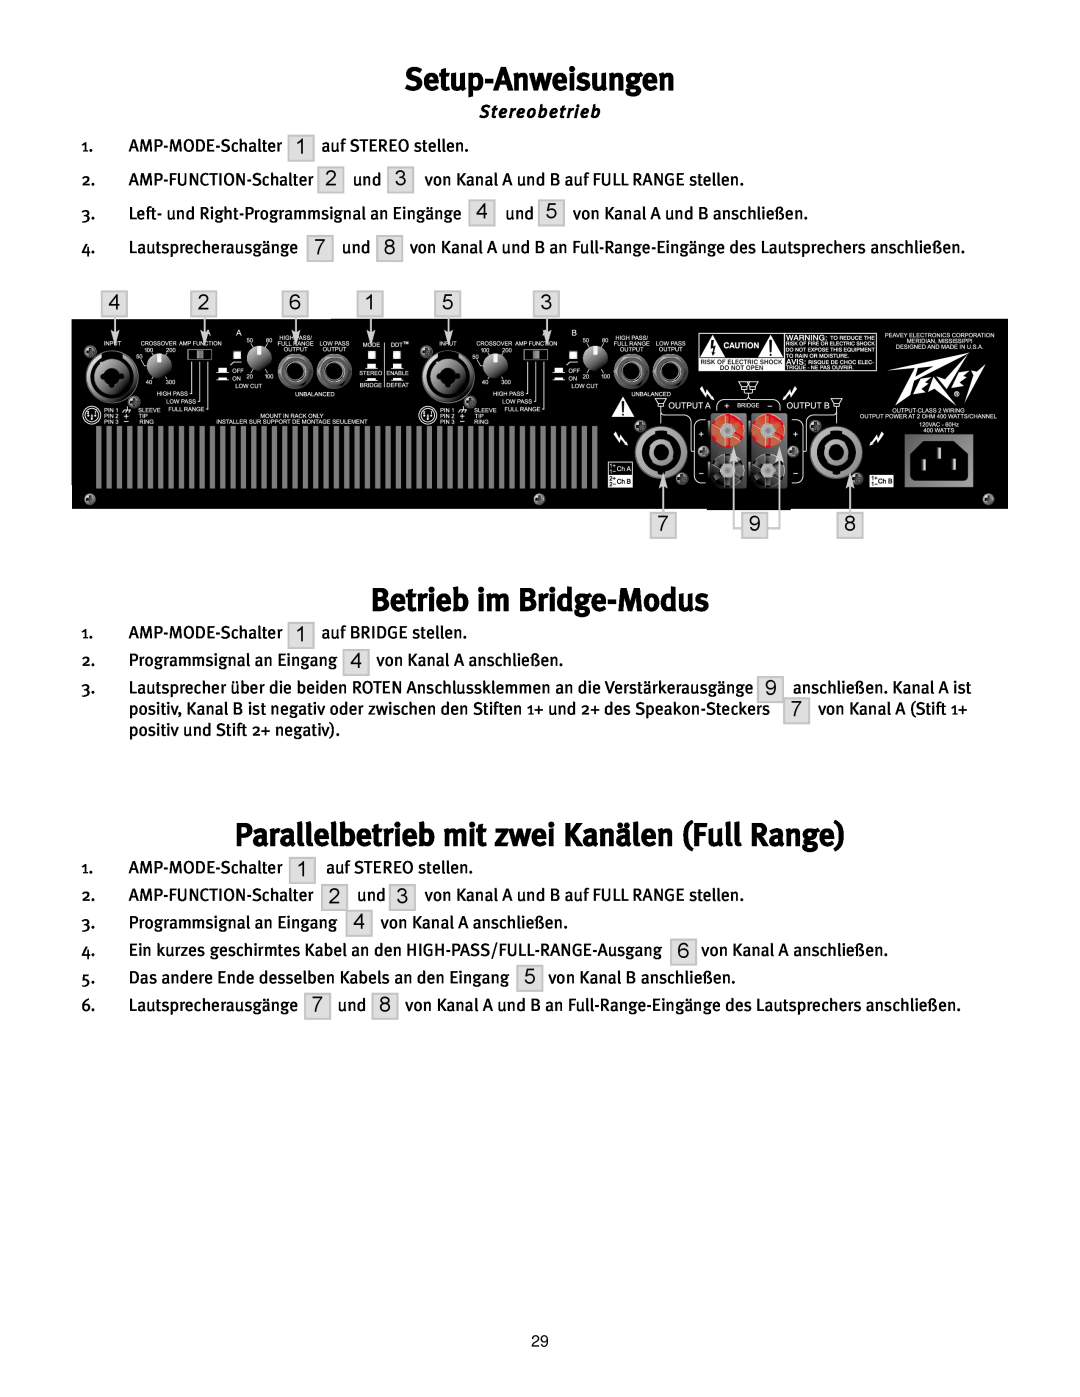 Peavey CS 800H manual Setup-Anweisungen, Betrieb im Bridge-Modus, Parallelbetrieb mit zwei Kanälen Full Range 